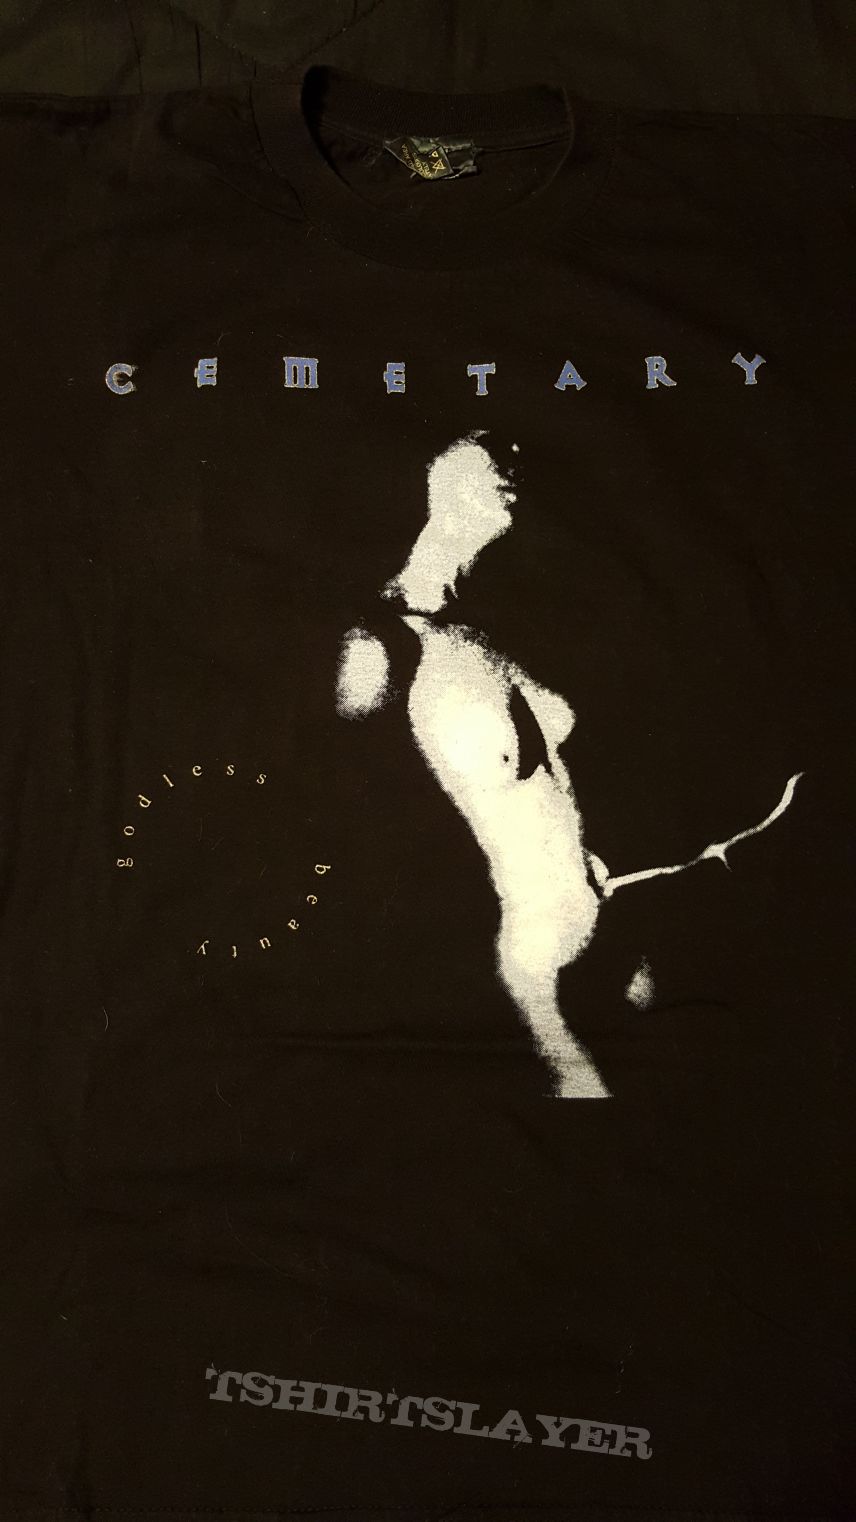 Cemetary - Godless Beauty